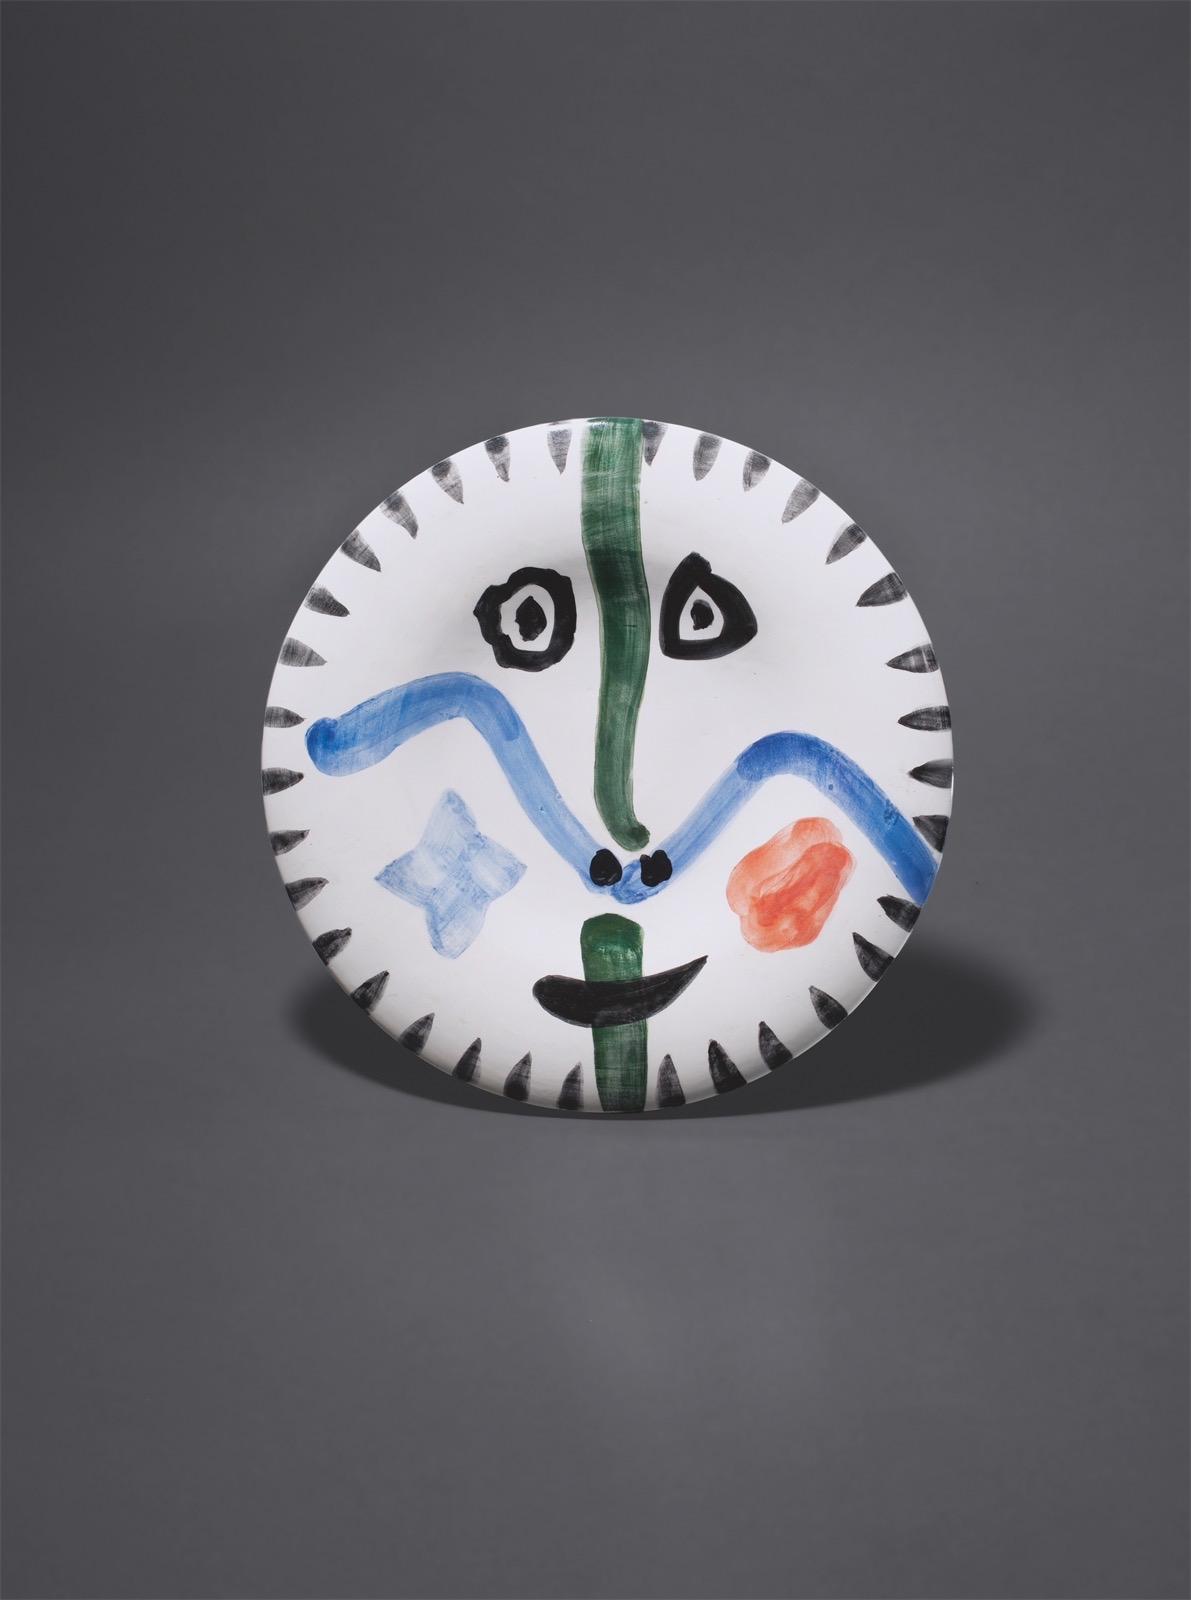 Pablo Picasso. ”Visage no. 111”. 1963